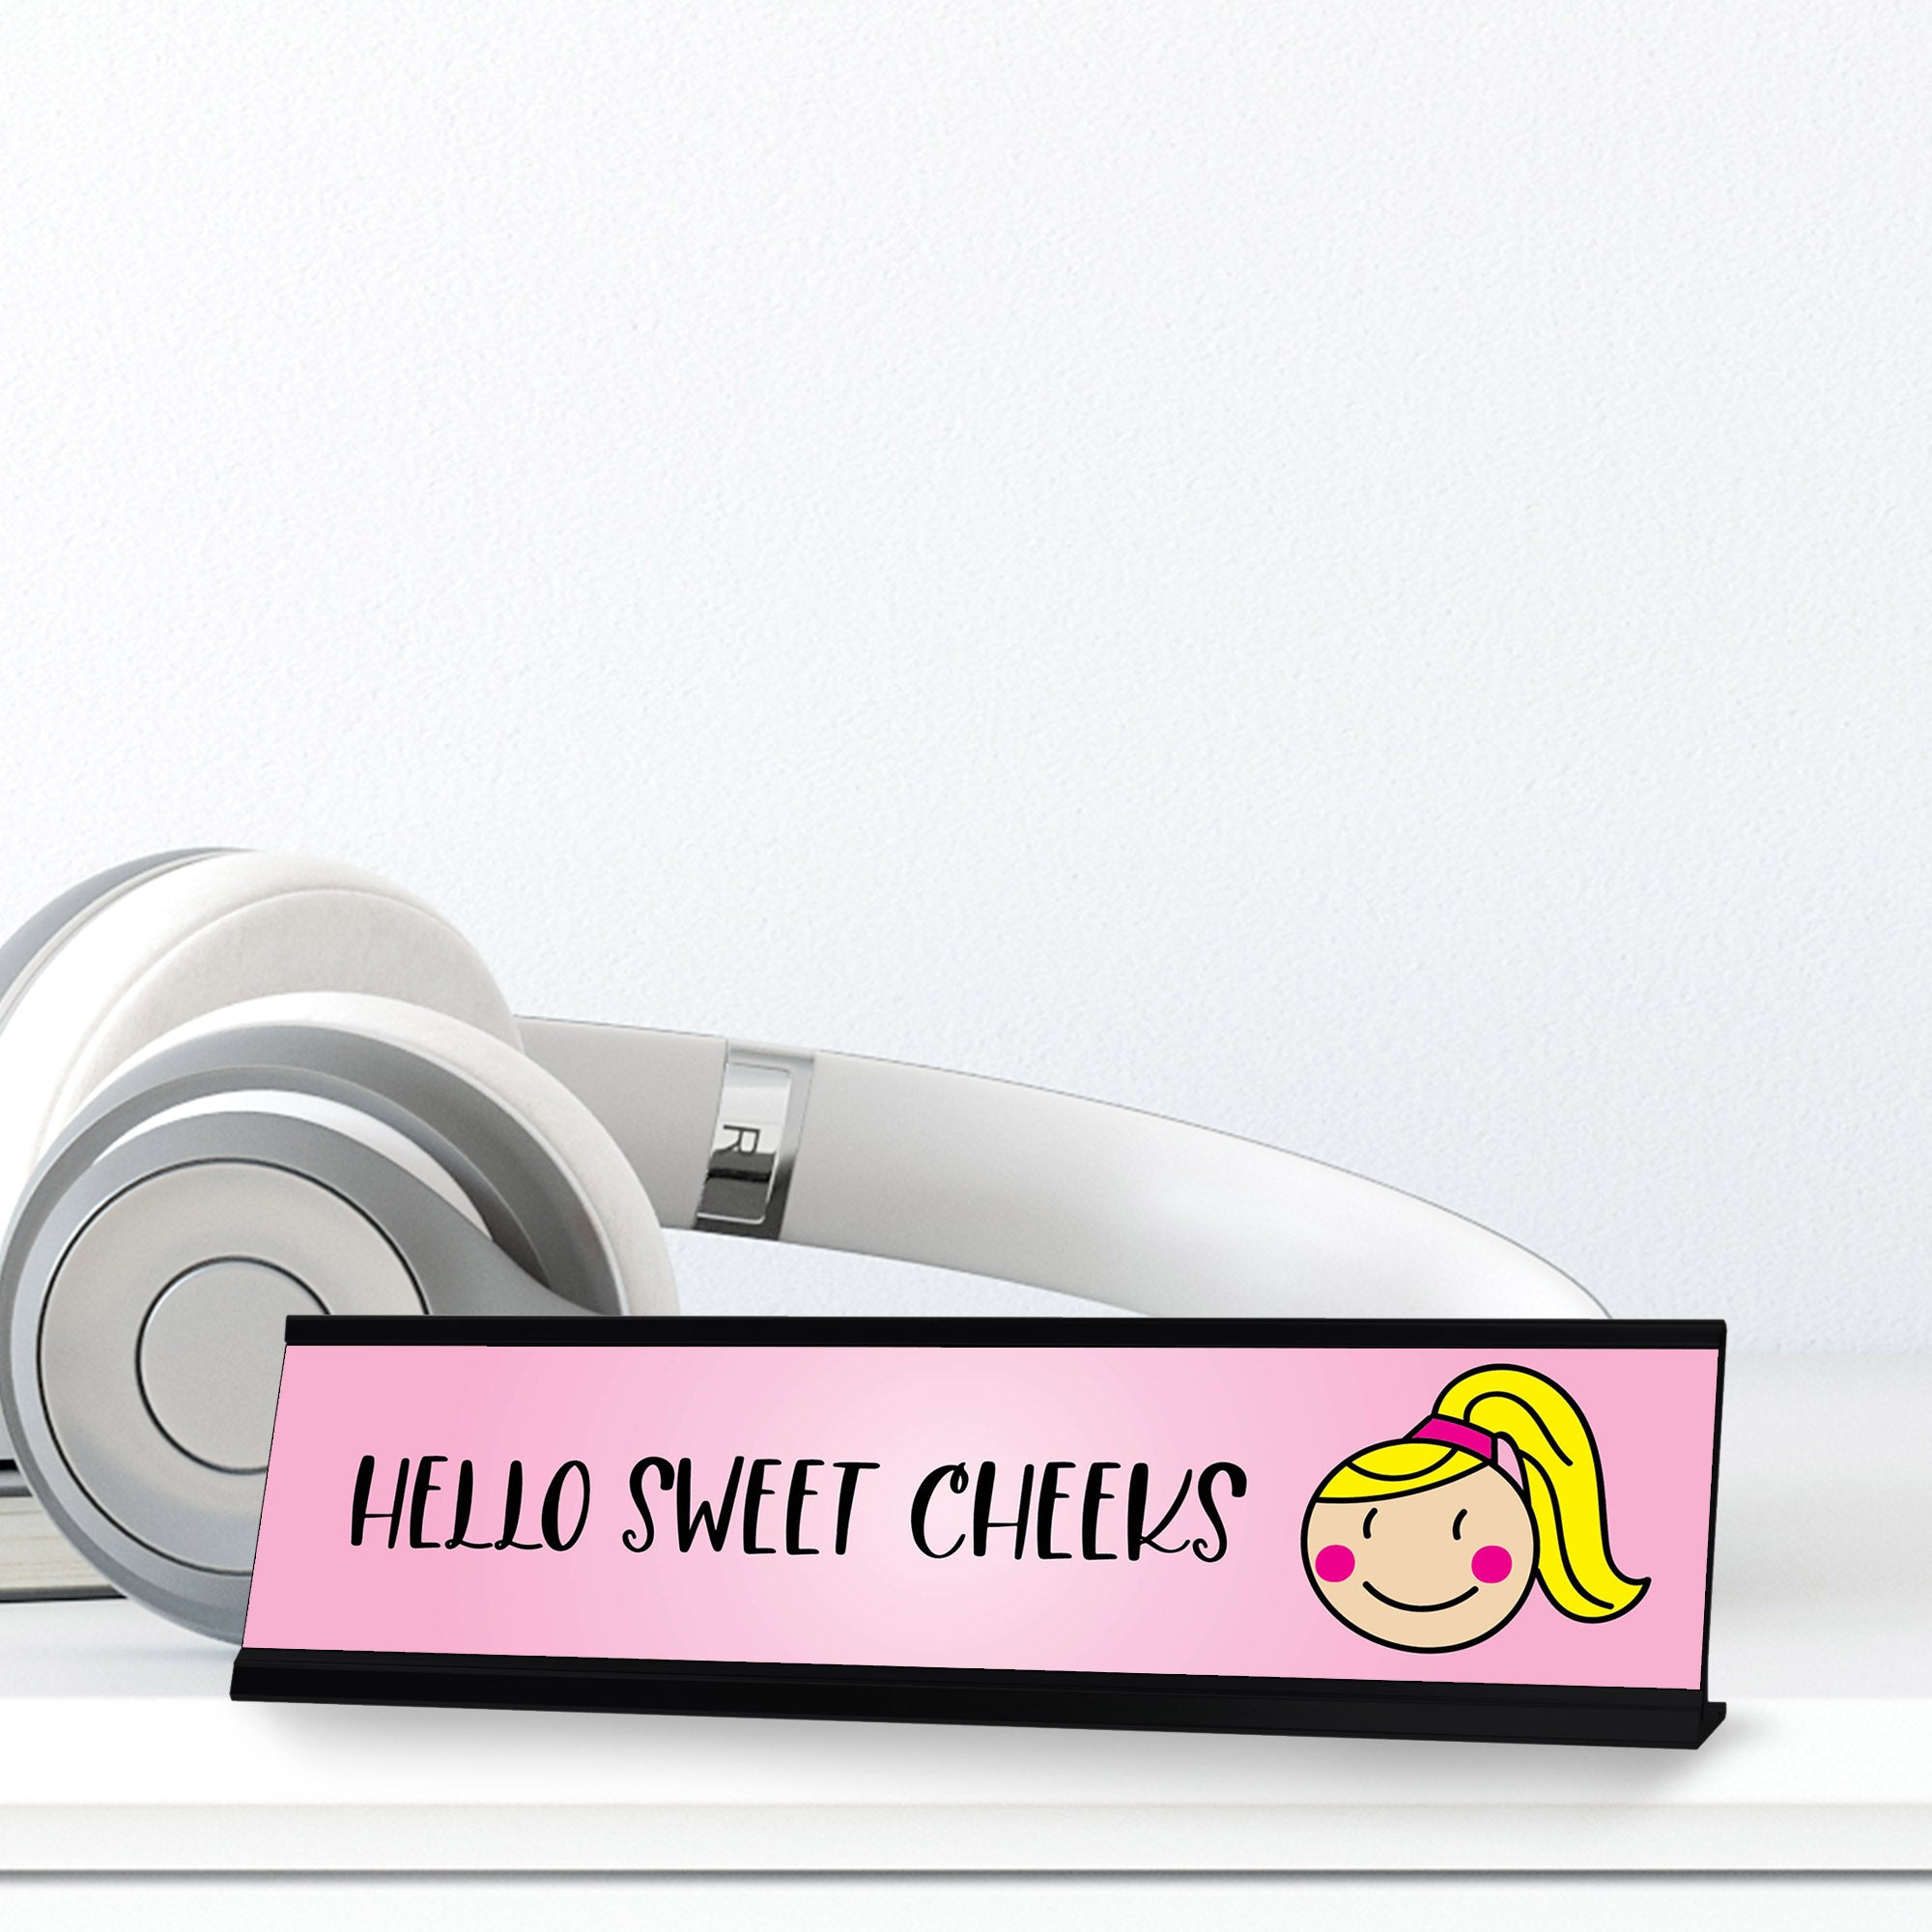 Hello Sweet Cheeks, Stick People Desk Sign, Novelty Nameplate (2 x 8")